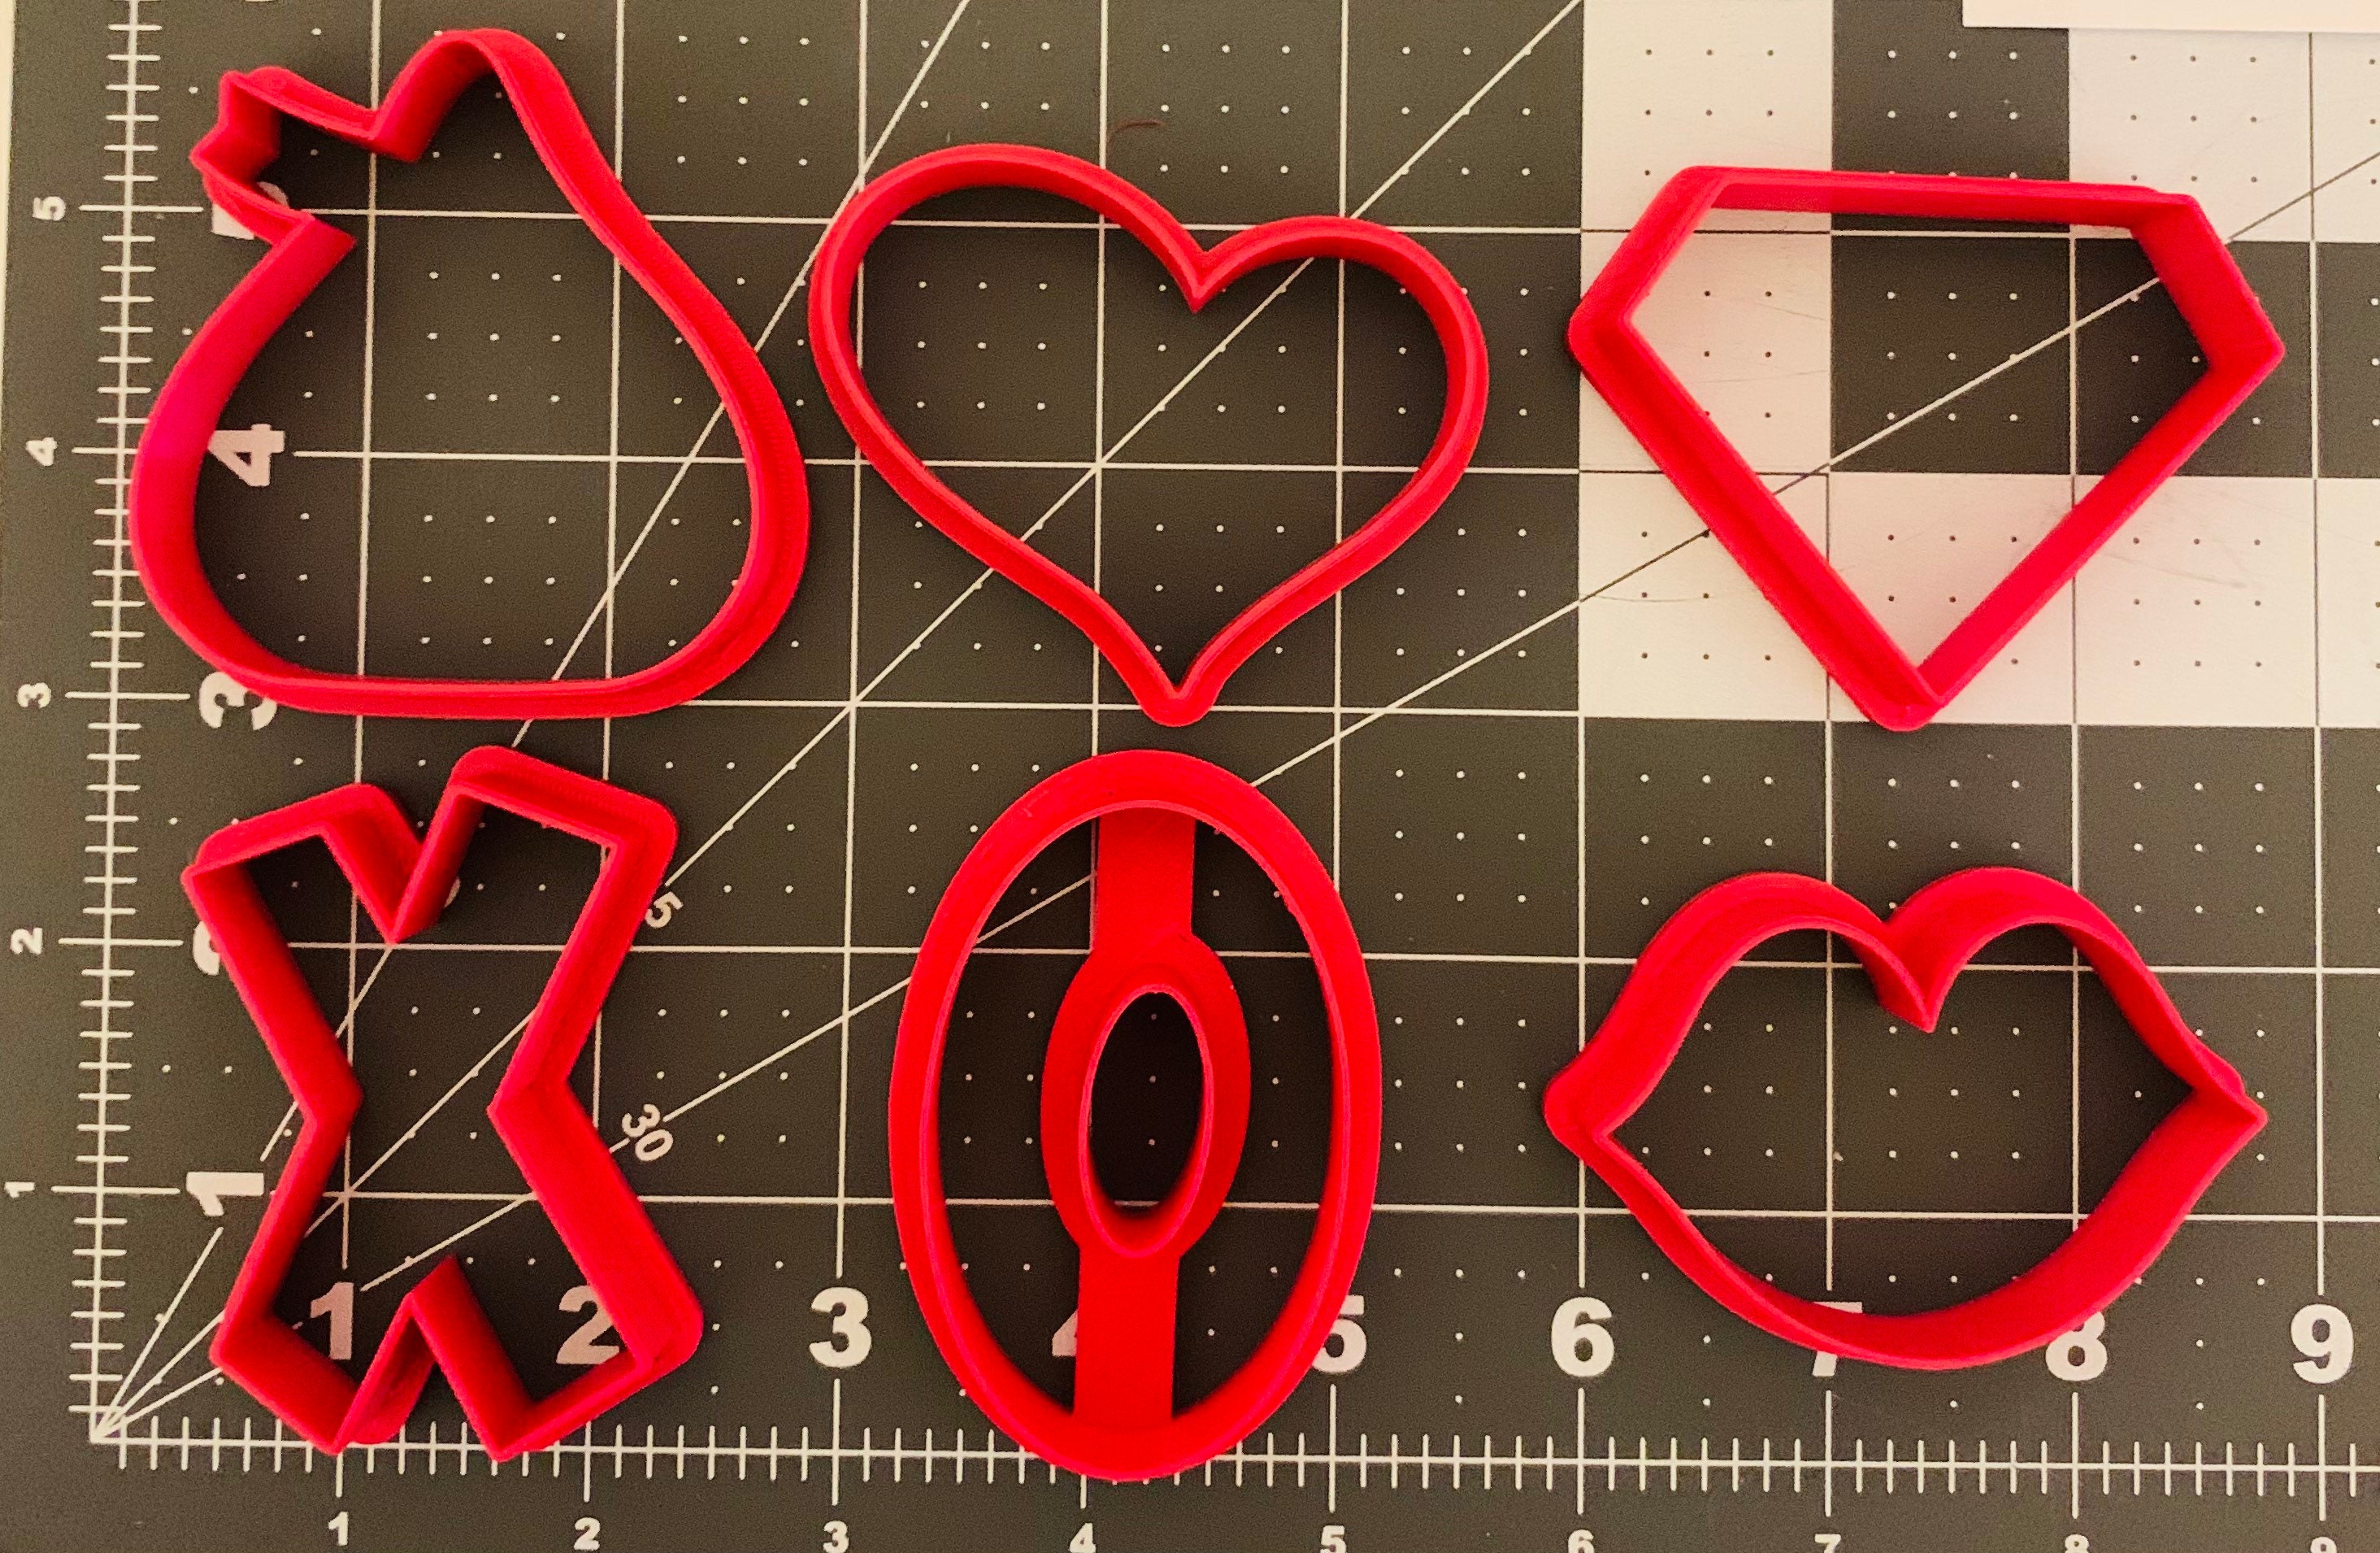 R & M Mini Valentine 6 Piece Cookie Cutters Set